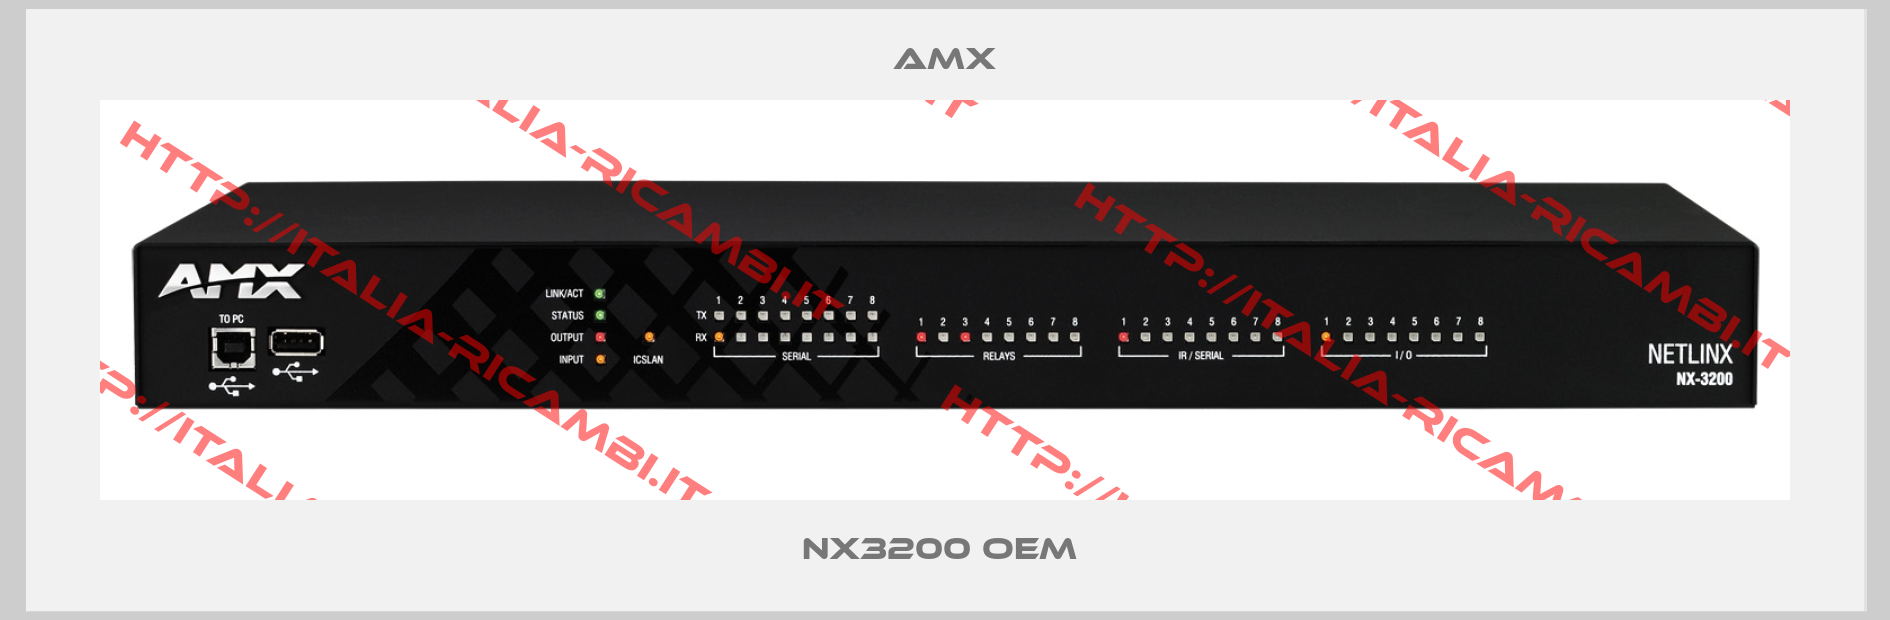 Amx-NX3200 OEM 